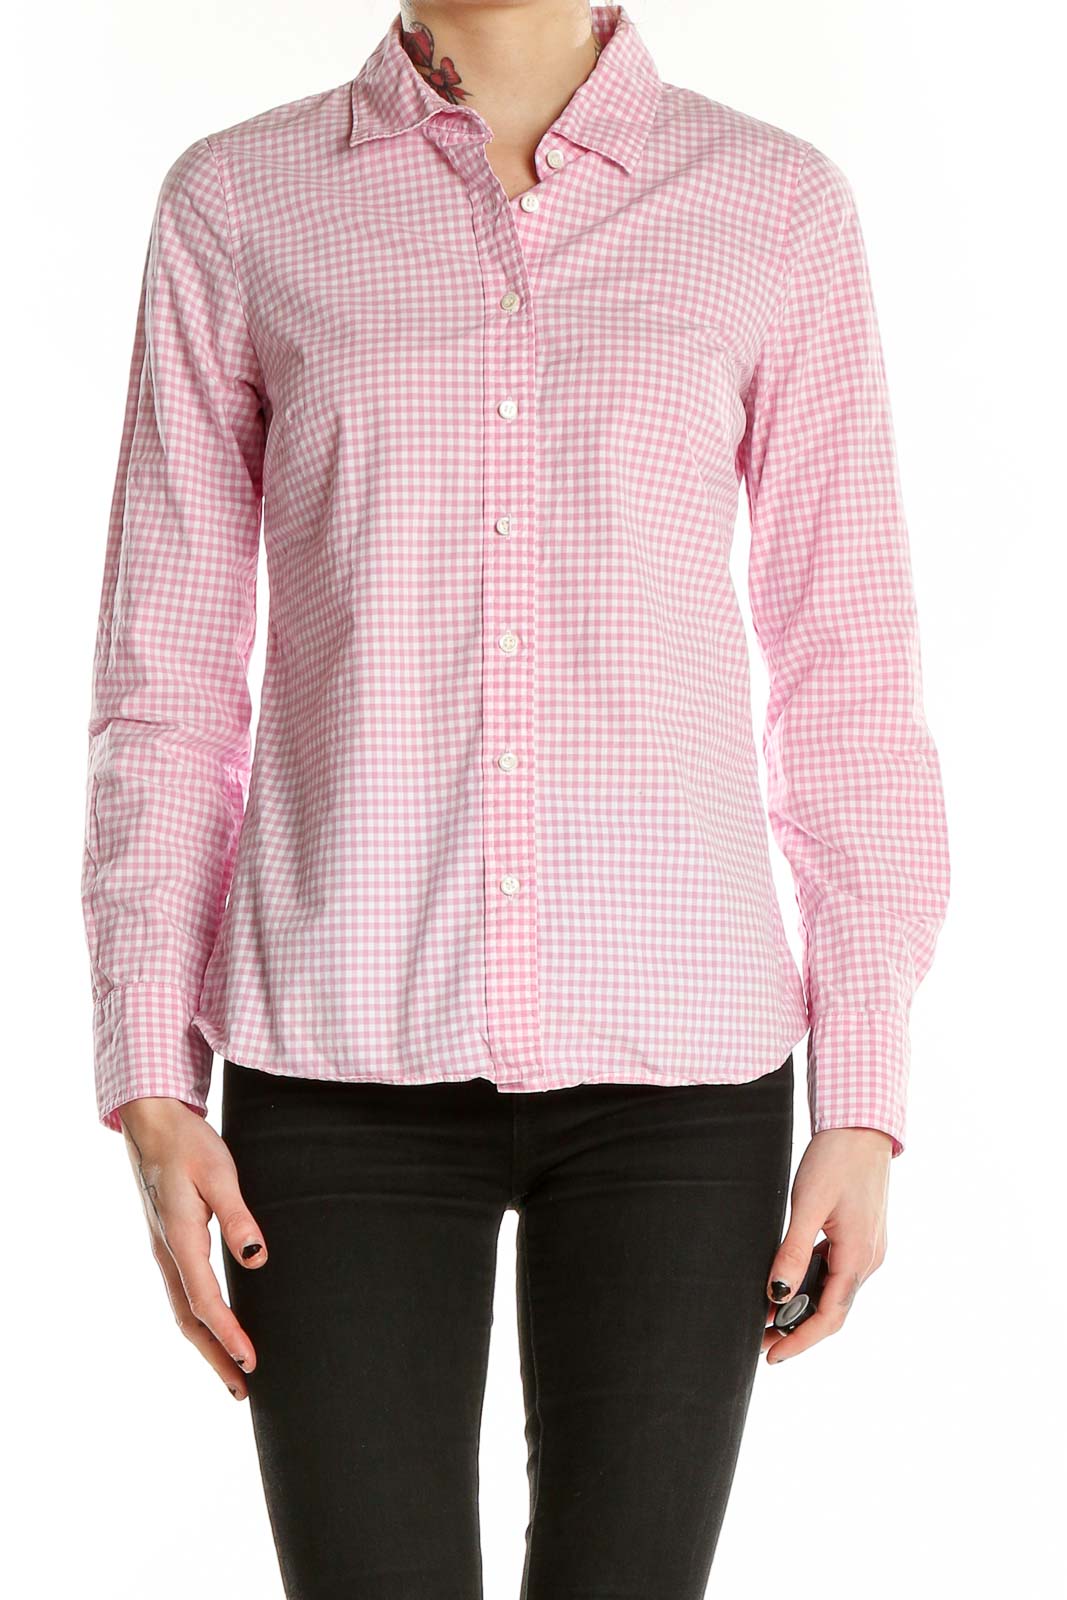 Pink Checkered Shirt Front